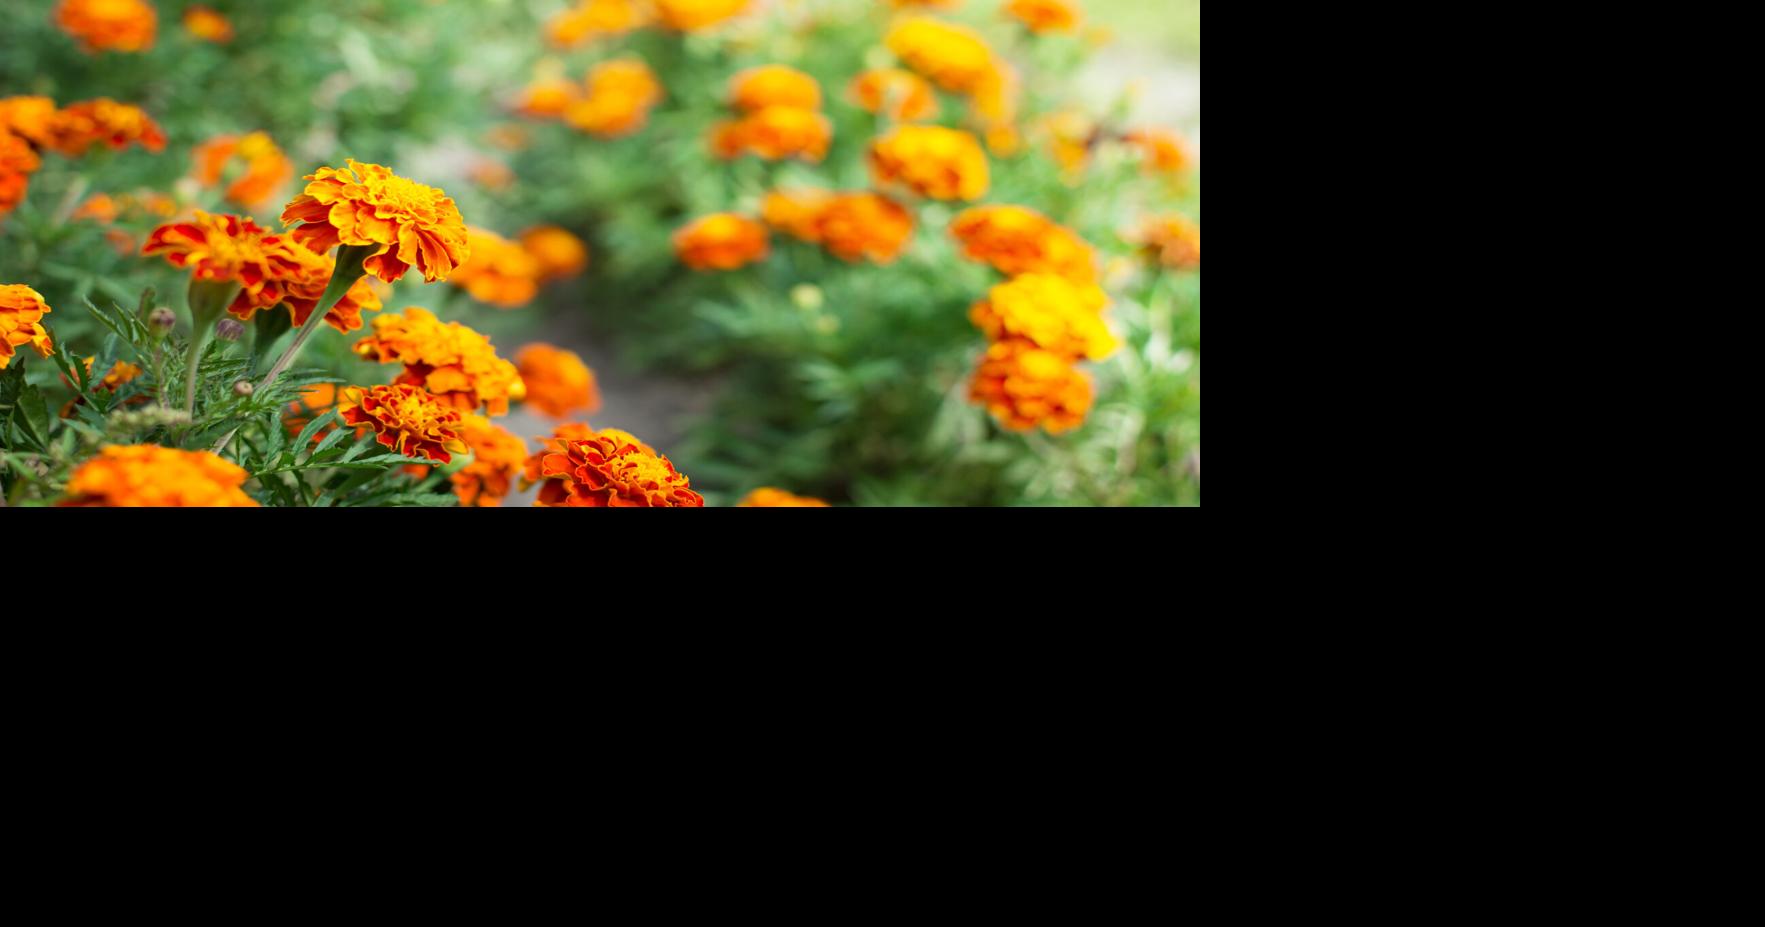 Autumn flower gardening advice from West Virginia experts